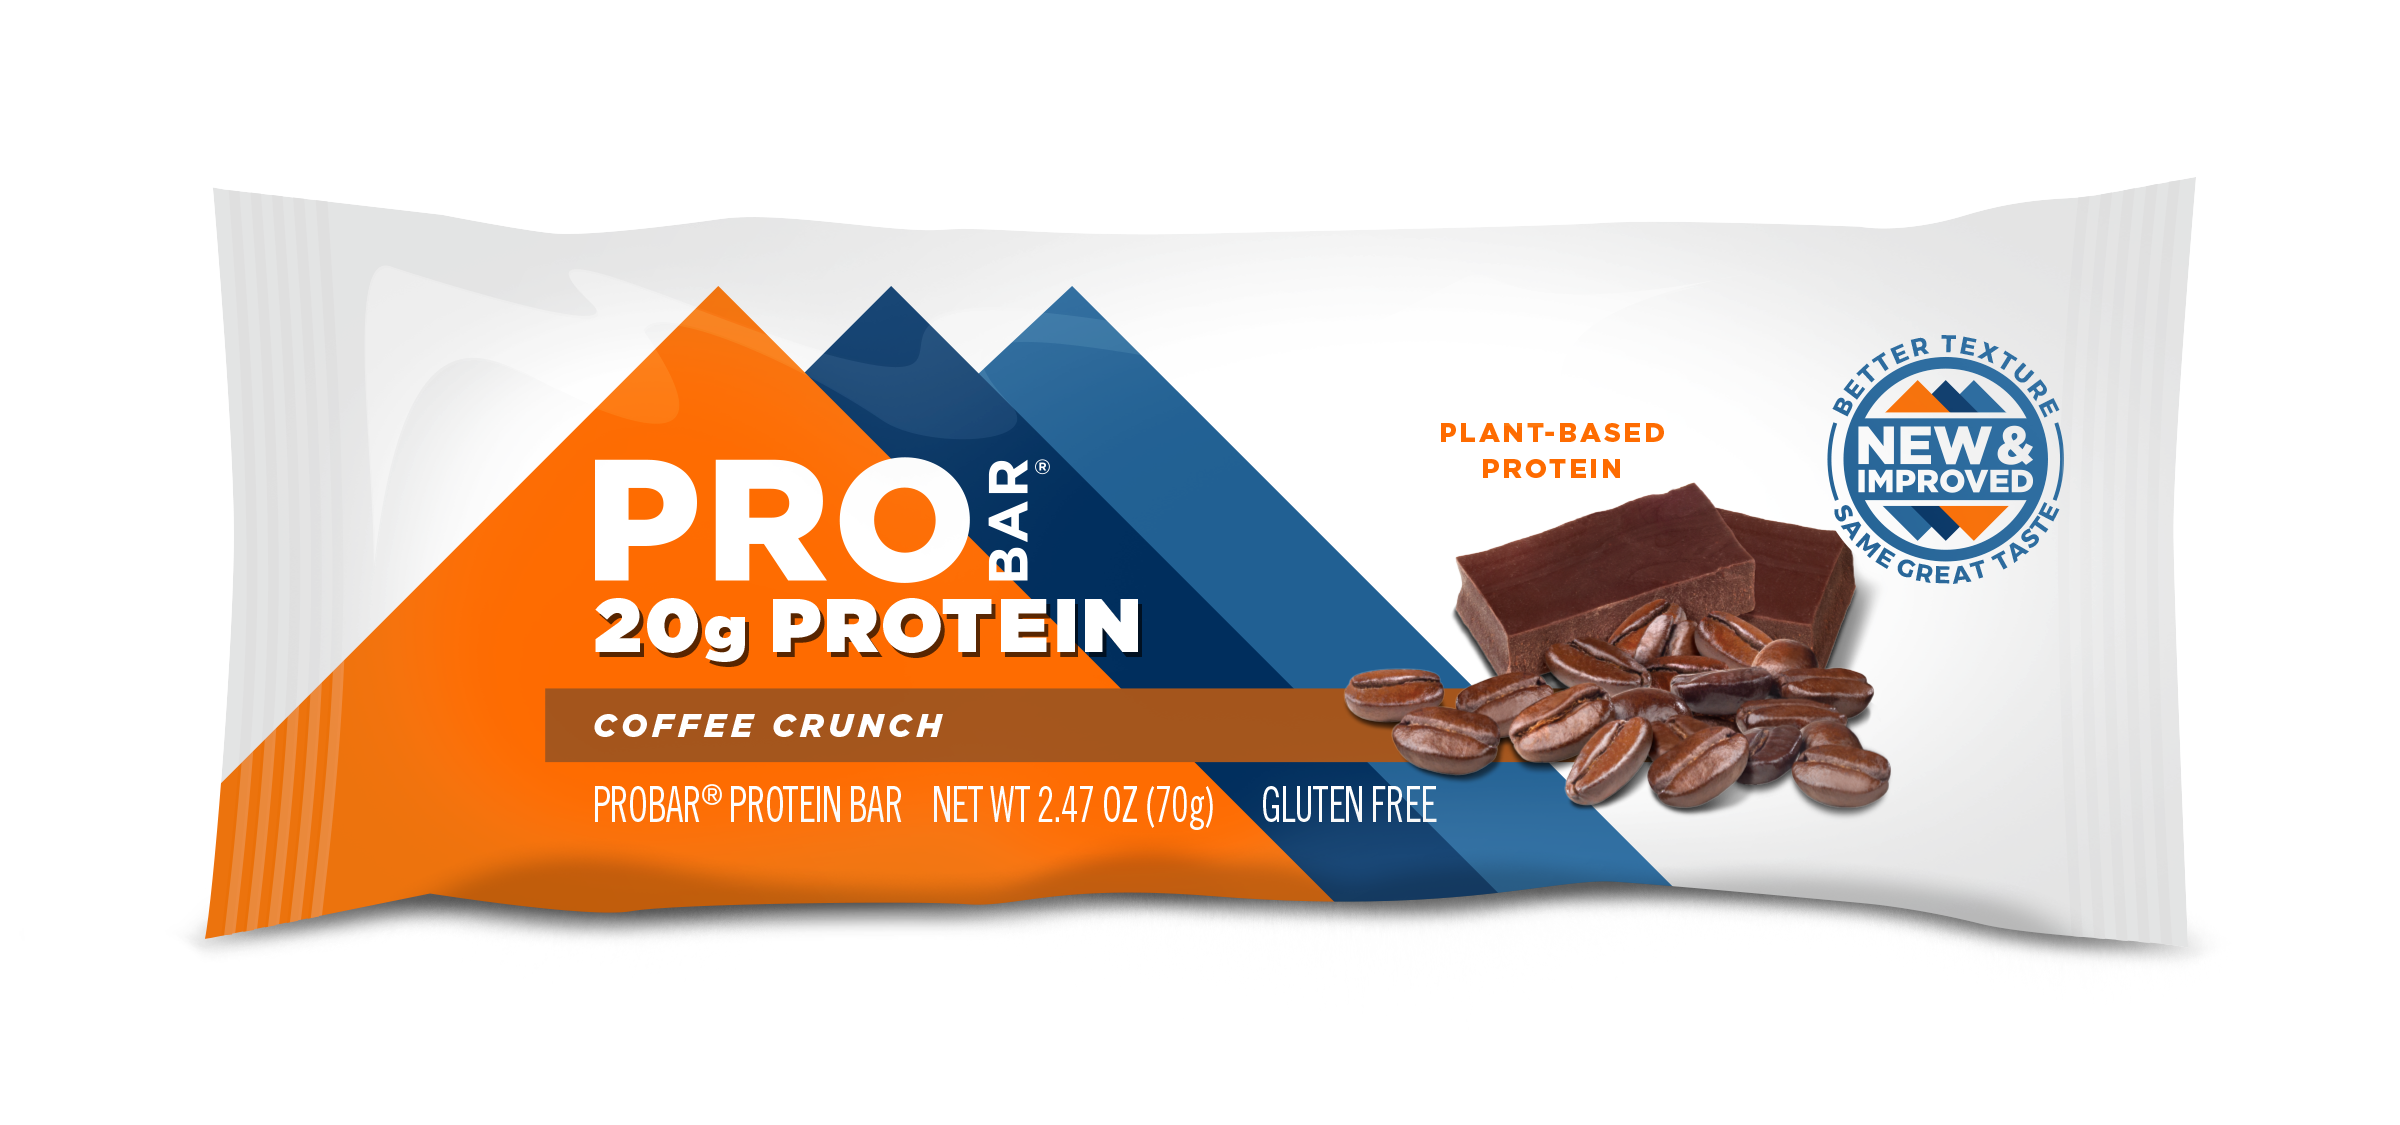 ProBar Coffee Crunch Protein Bar 12 innerpacks per case 2.5 oz